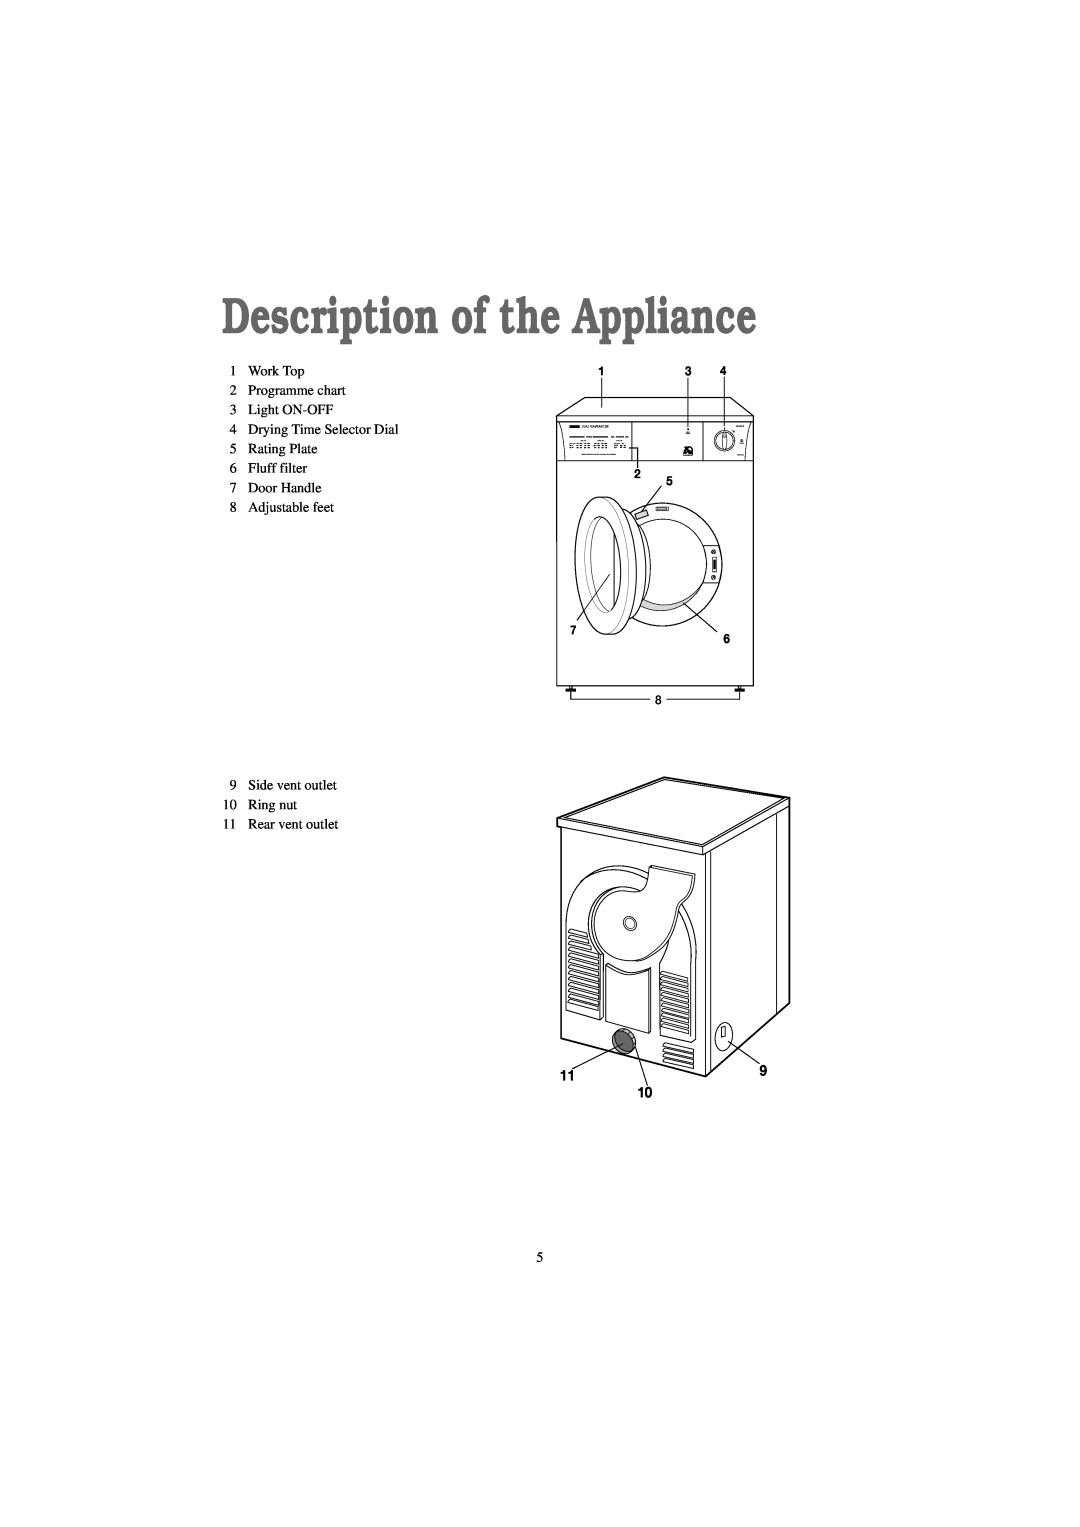 Zanussi TD 4100 W manual Description of the Appliance, Programme chart, Dual Temperature, Cotton, Synthetics, 70 - 90 65 